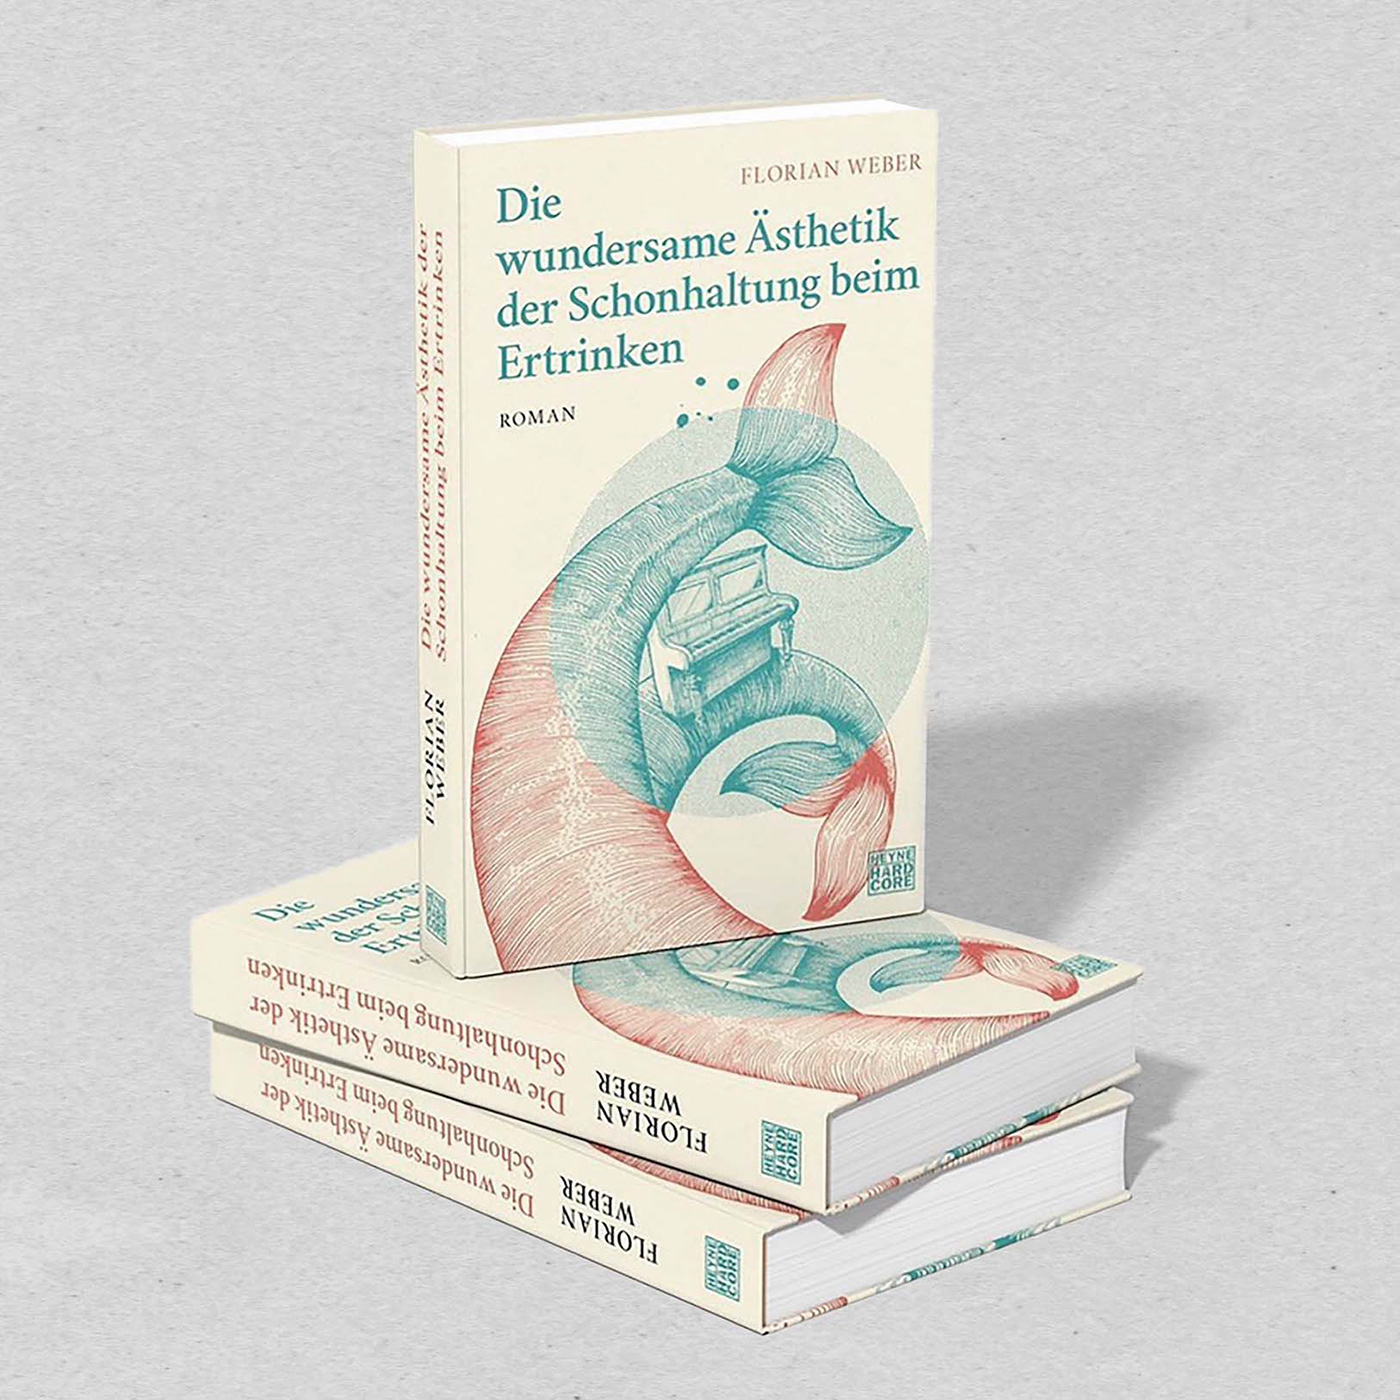 Book cover design and illustration for Florian Weber's latest novel.